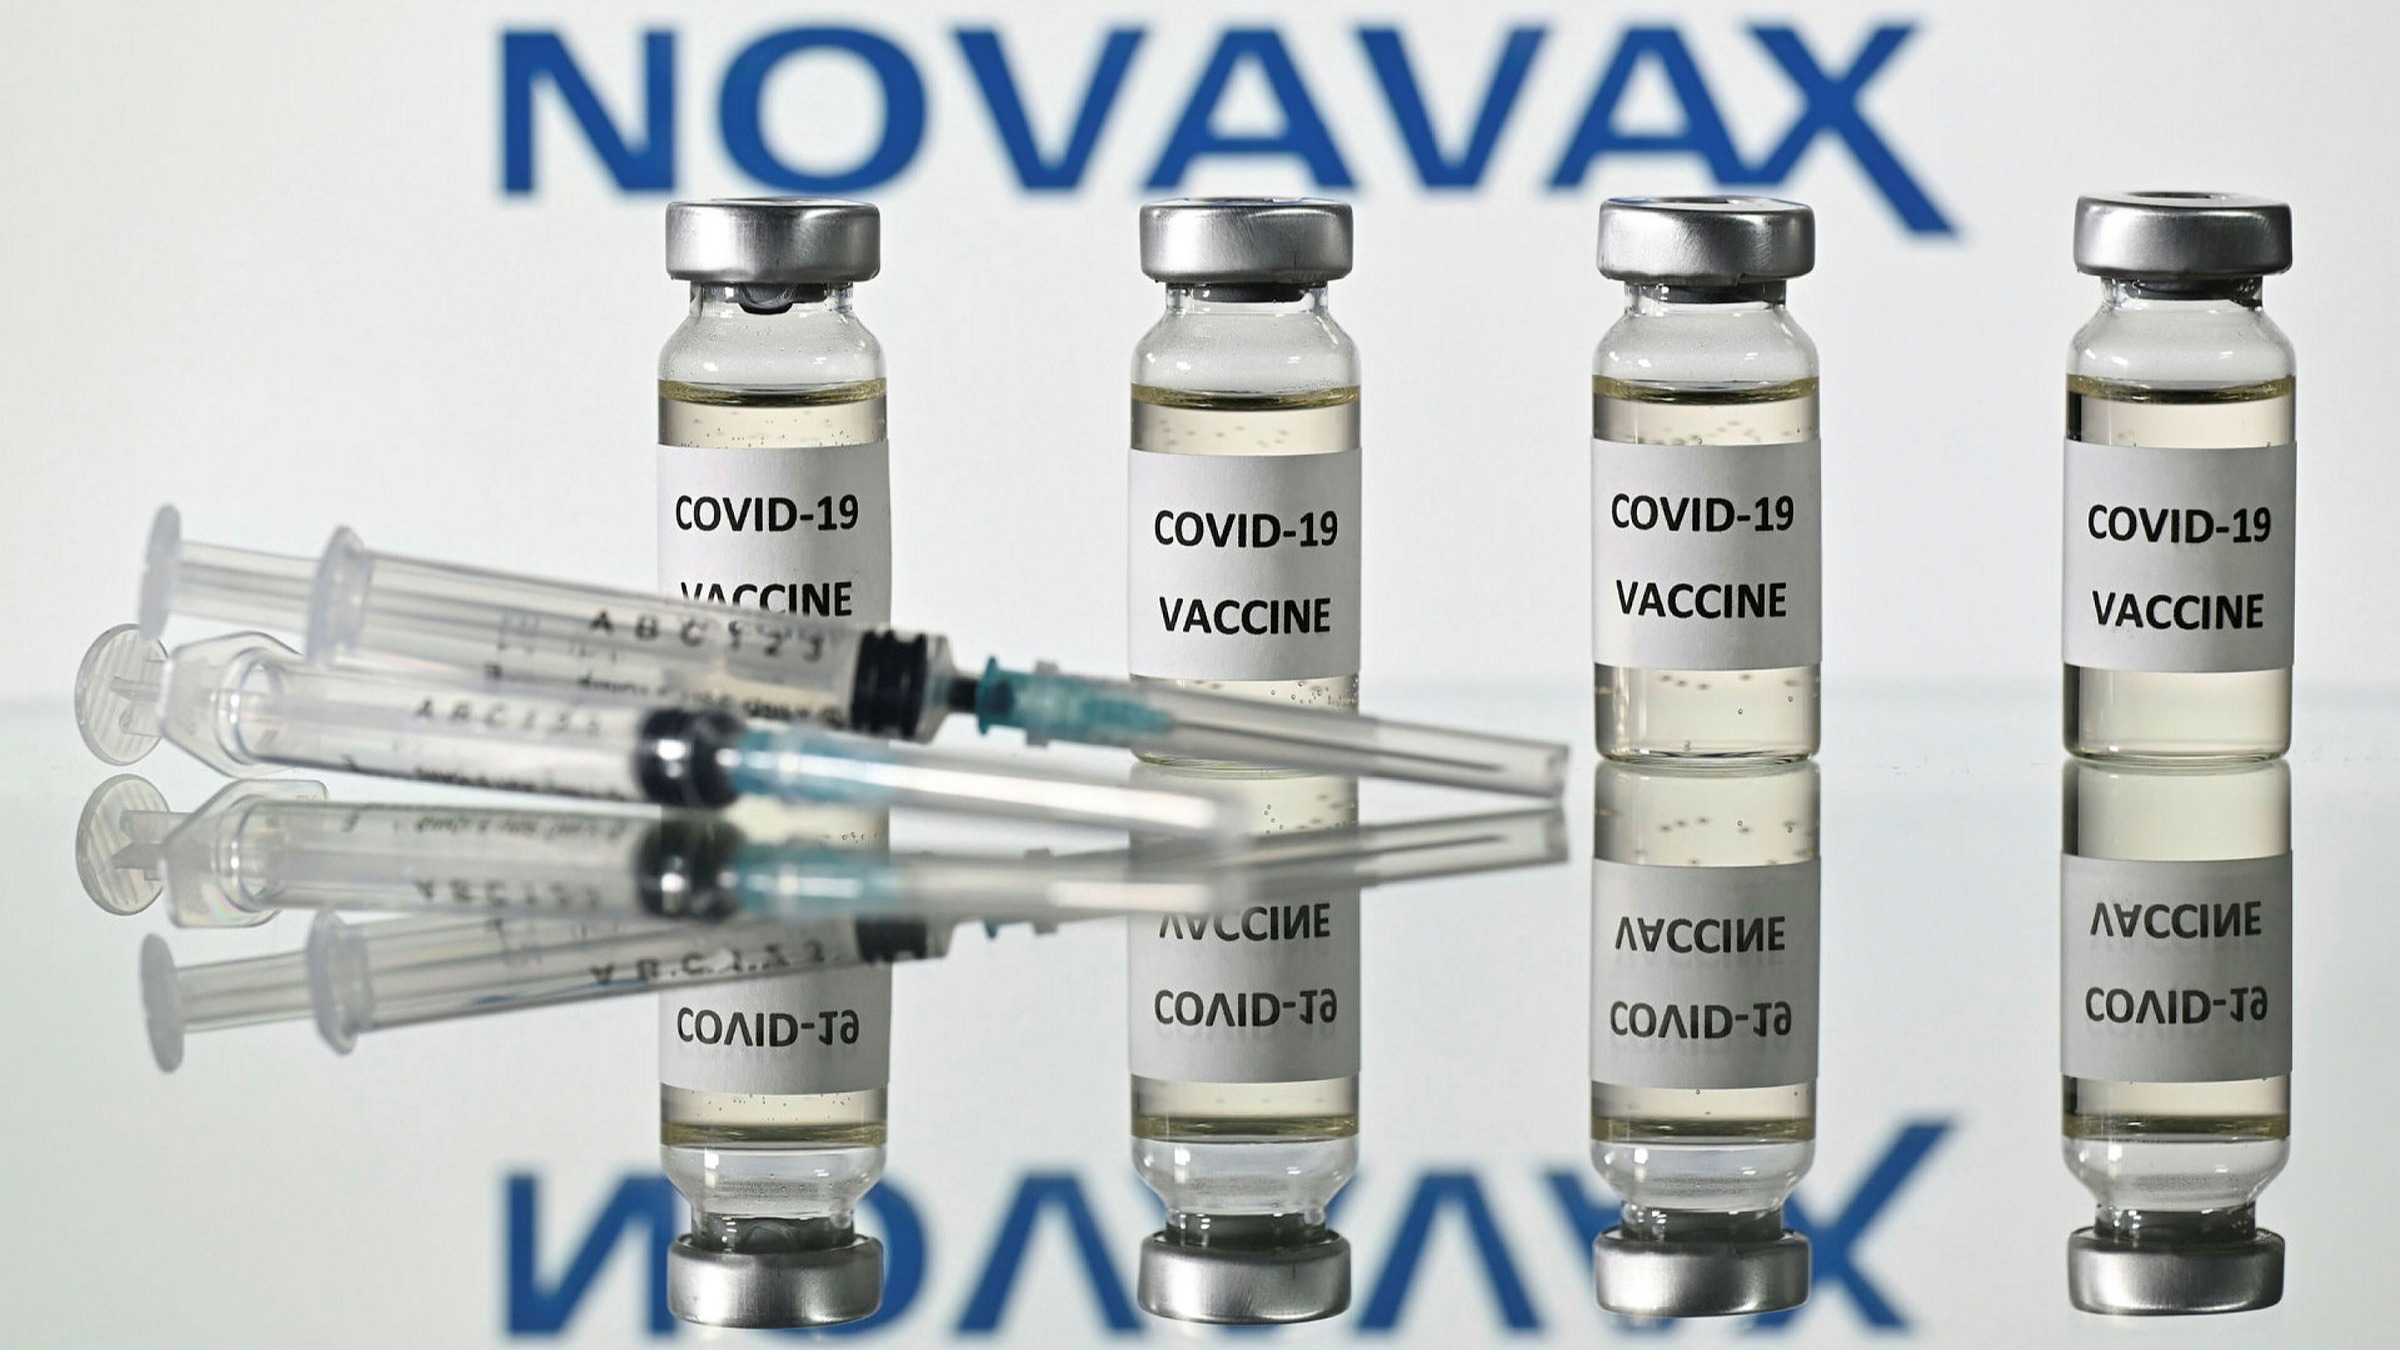 Covid vaccine developer Novavax rises 183% ytd on strong phase 3 results